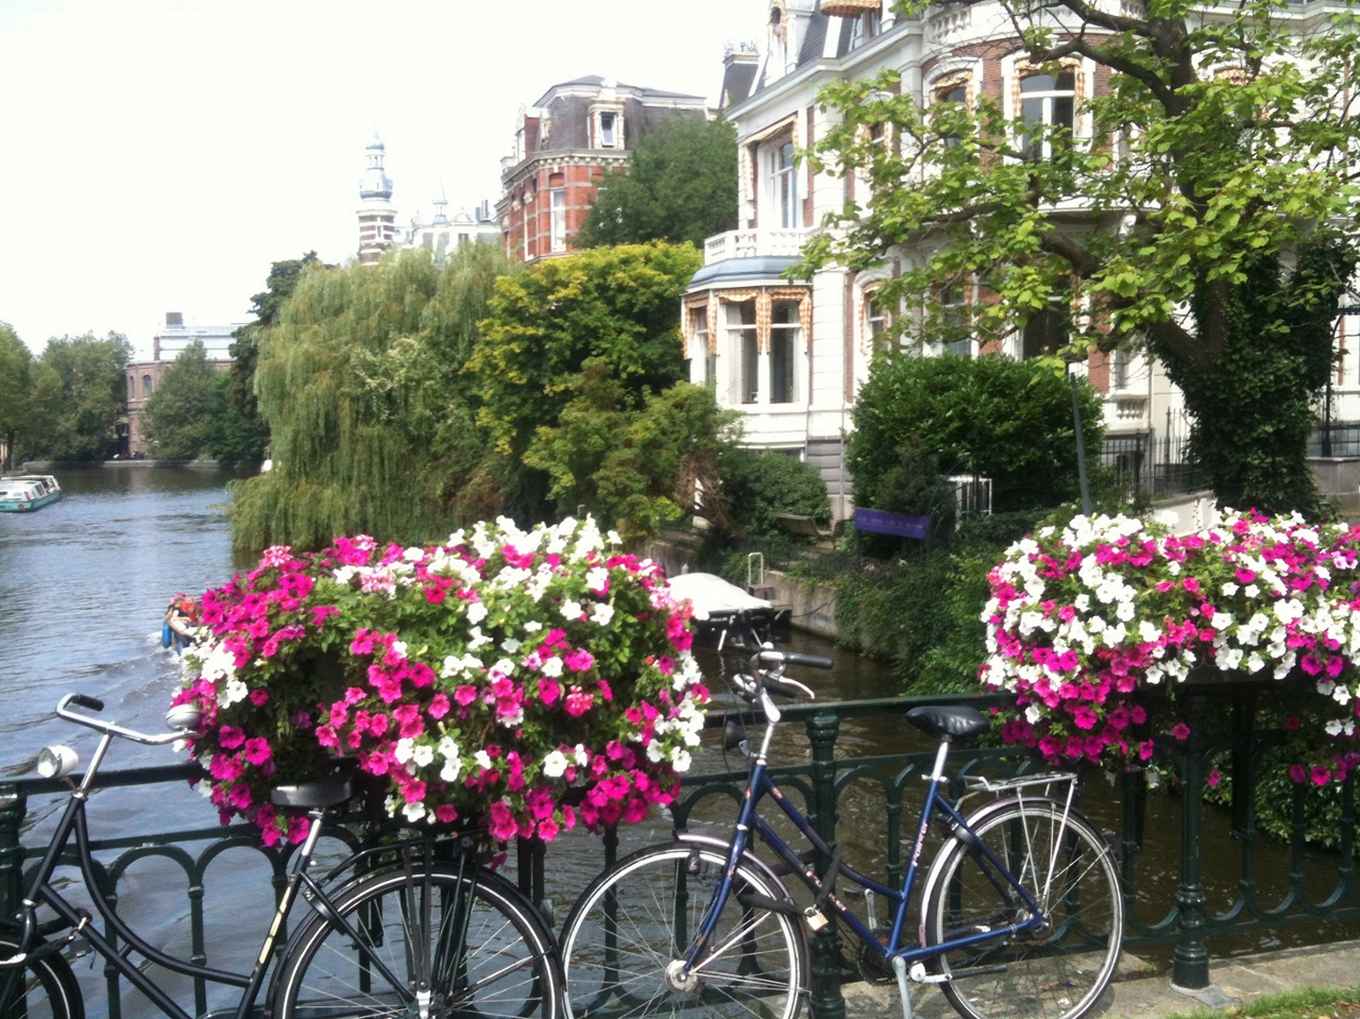 Petunia's op een Amsterdamse brug